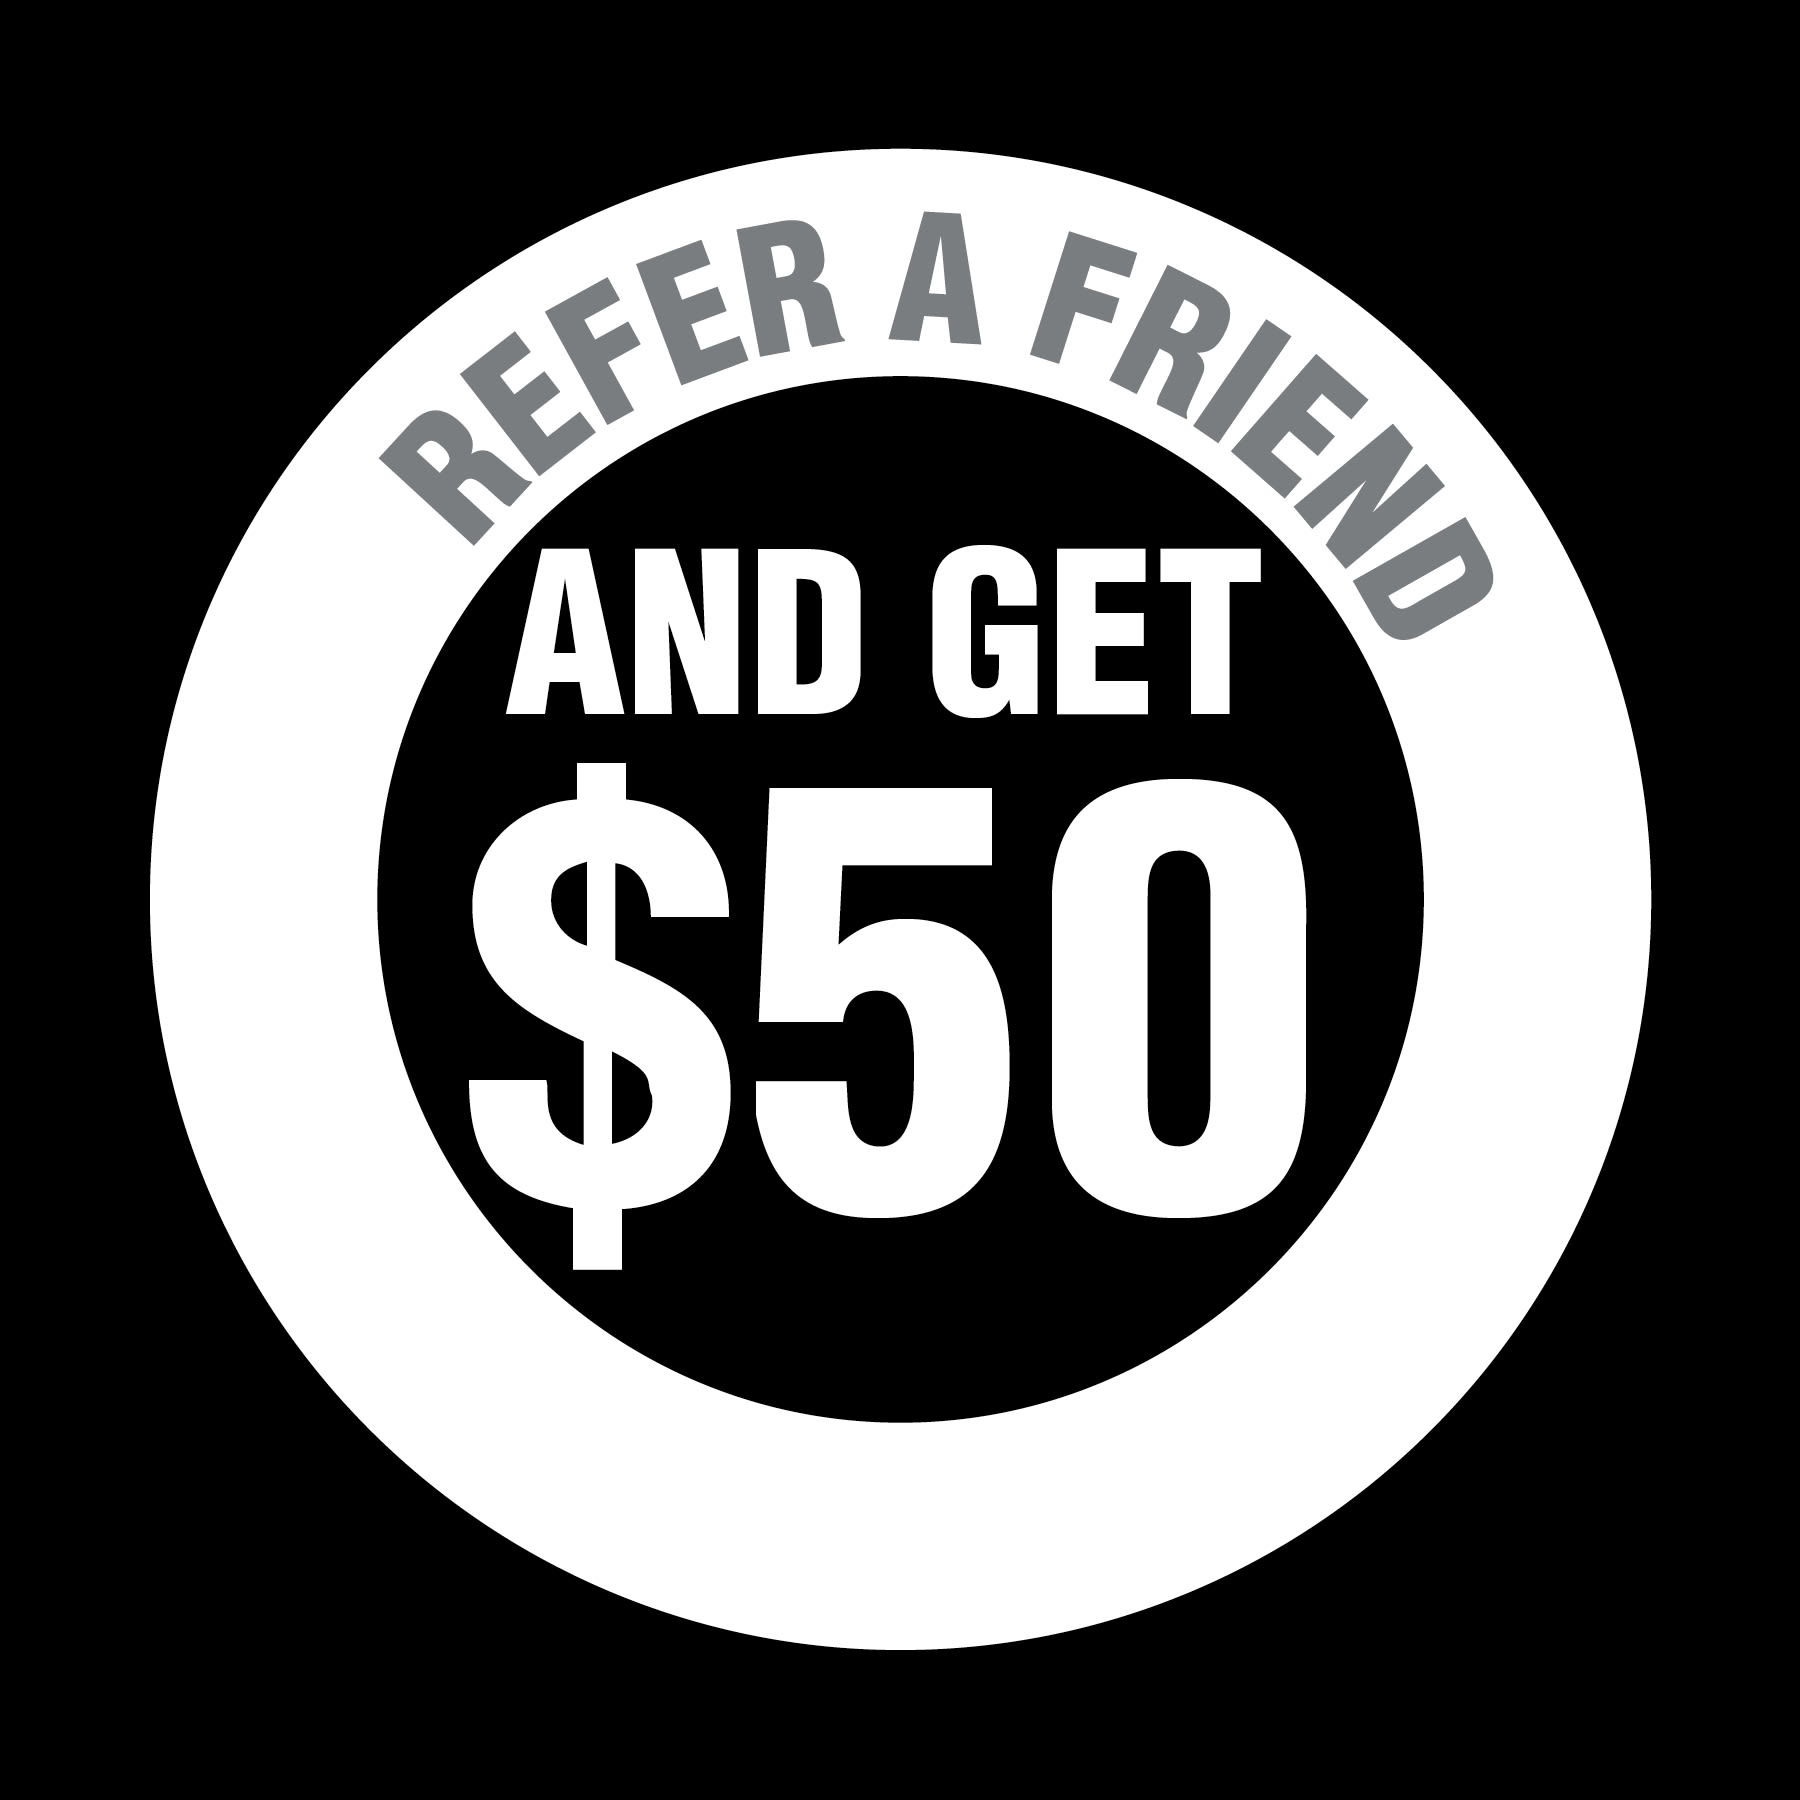 refer a friend logo